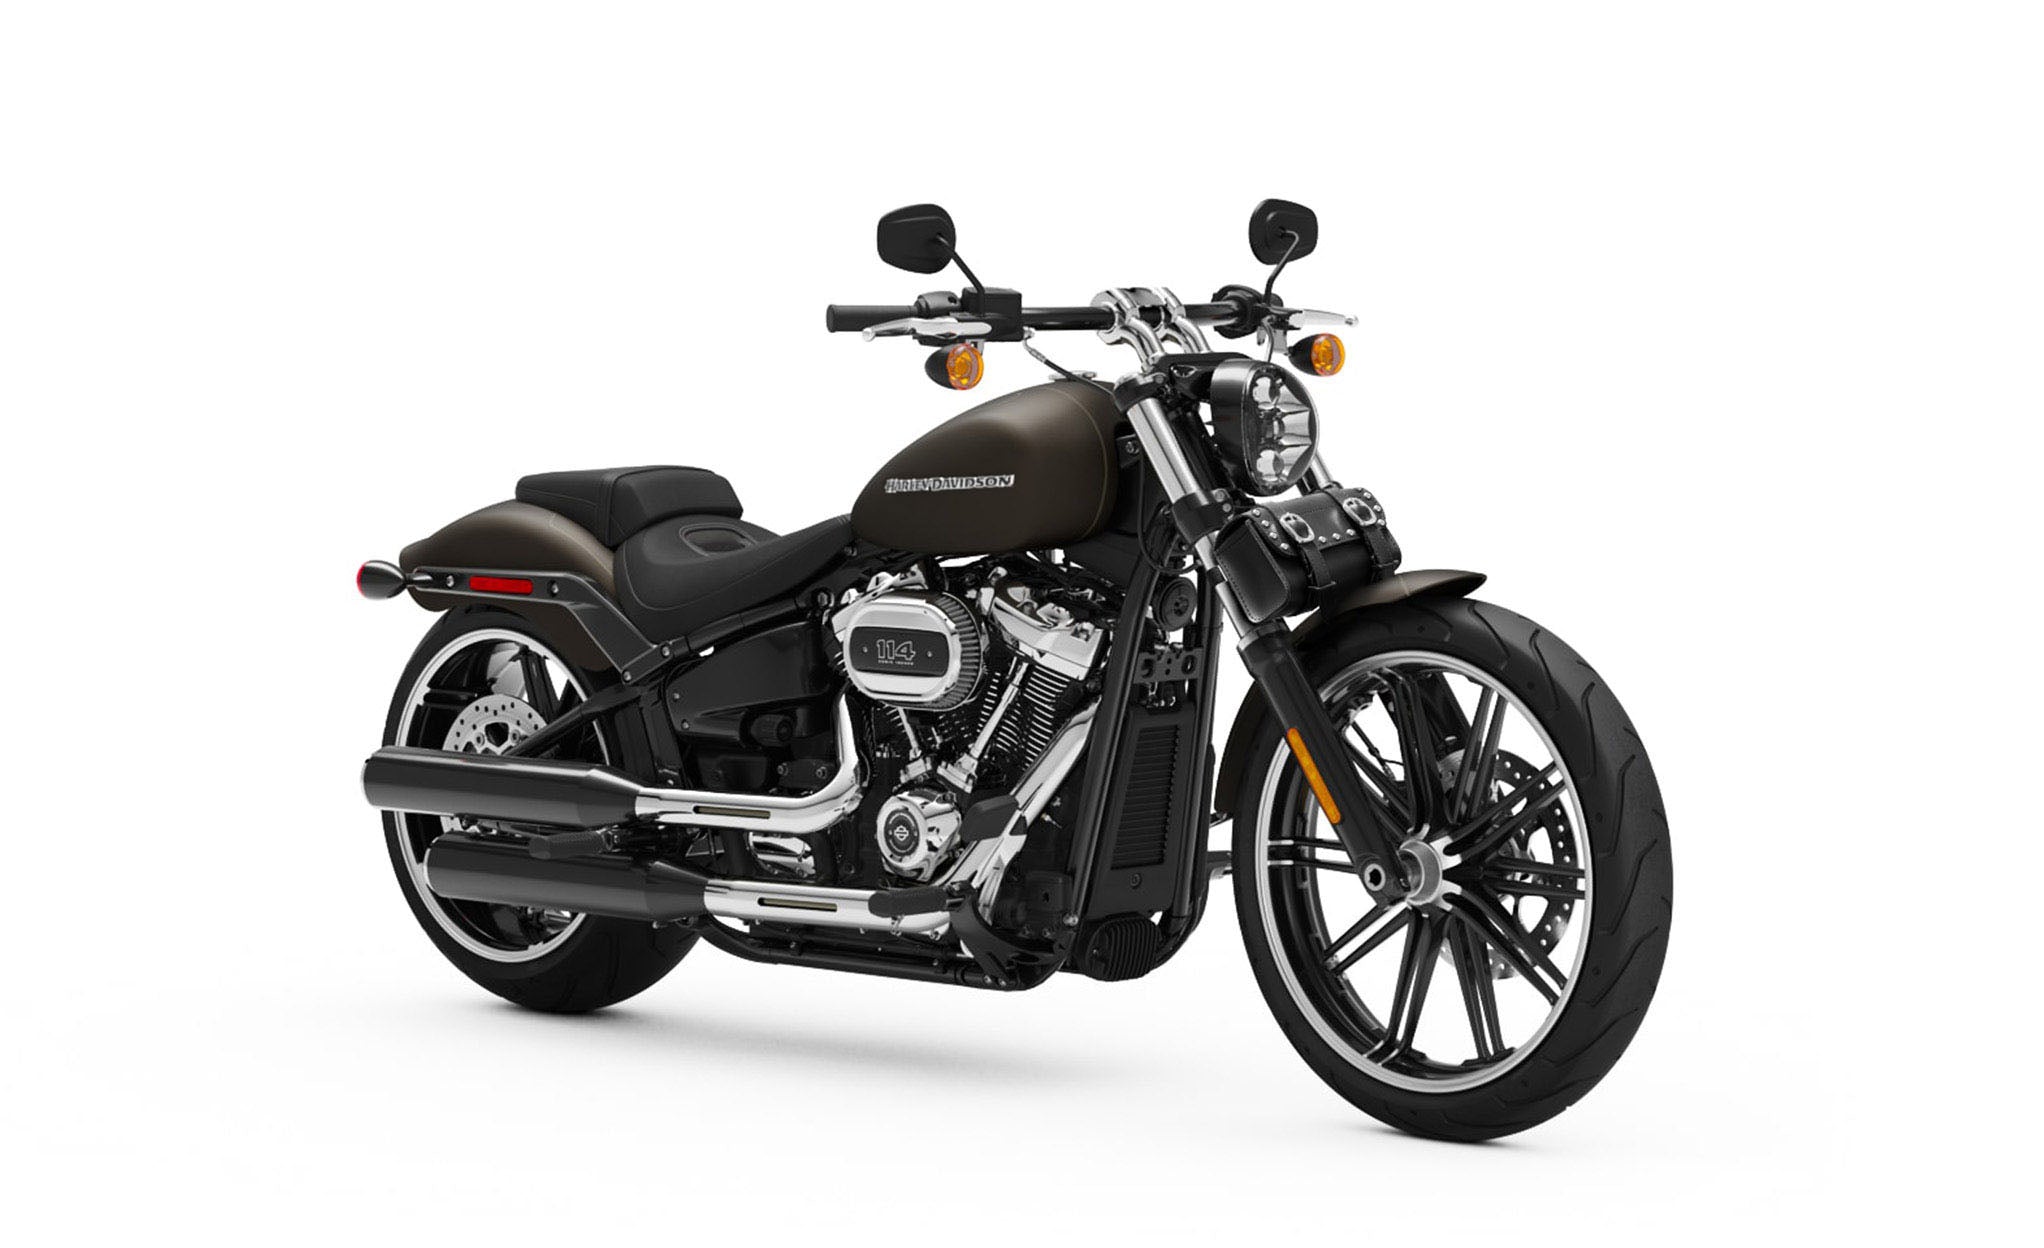 Viking Armor Studded Leather Motorcycle Tool Bag for Harley Davidson Bag on Bike View @expand